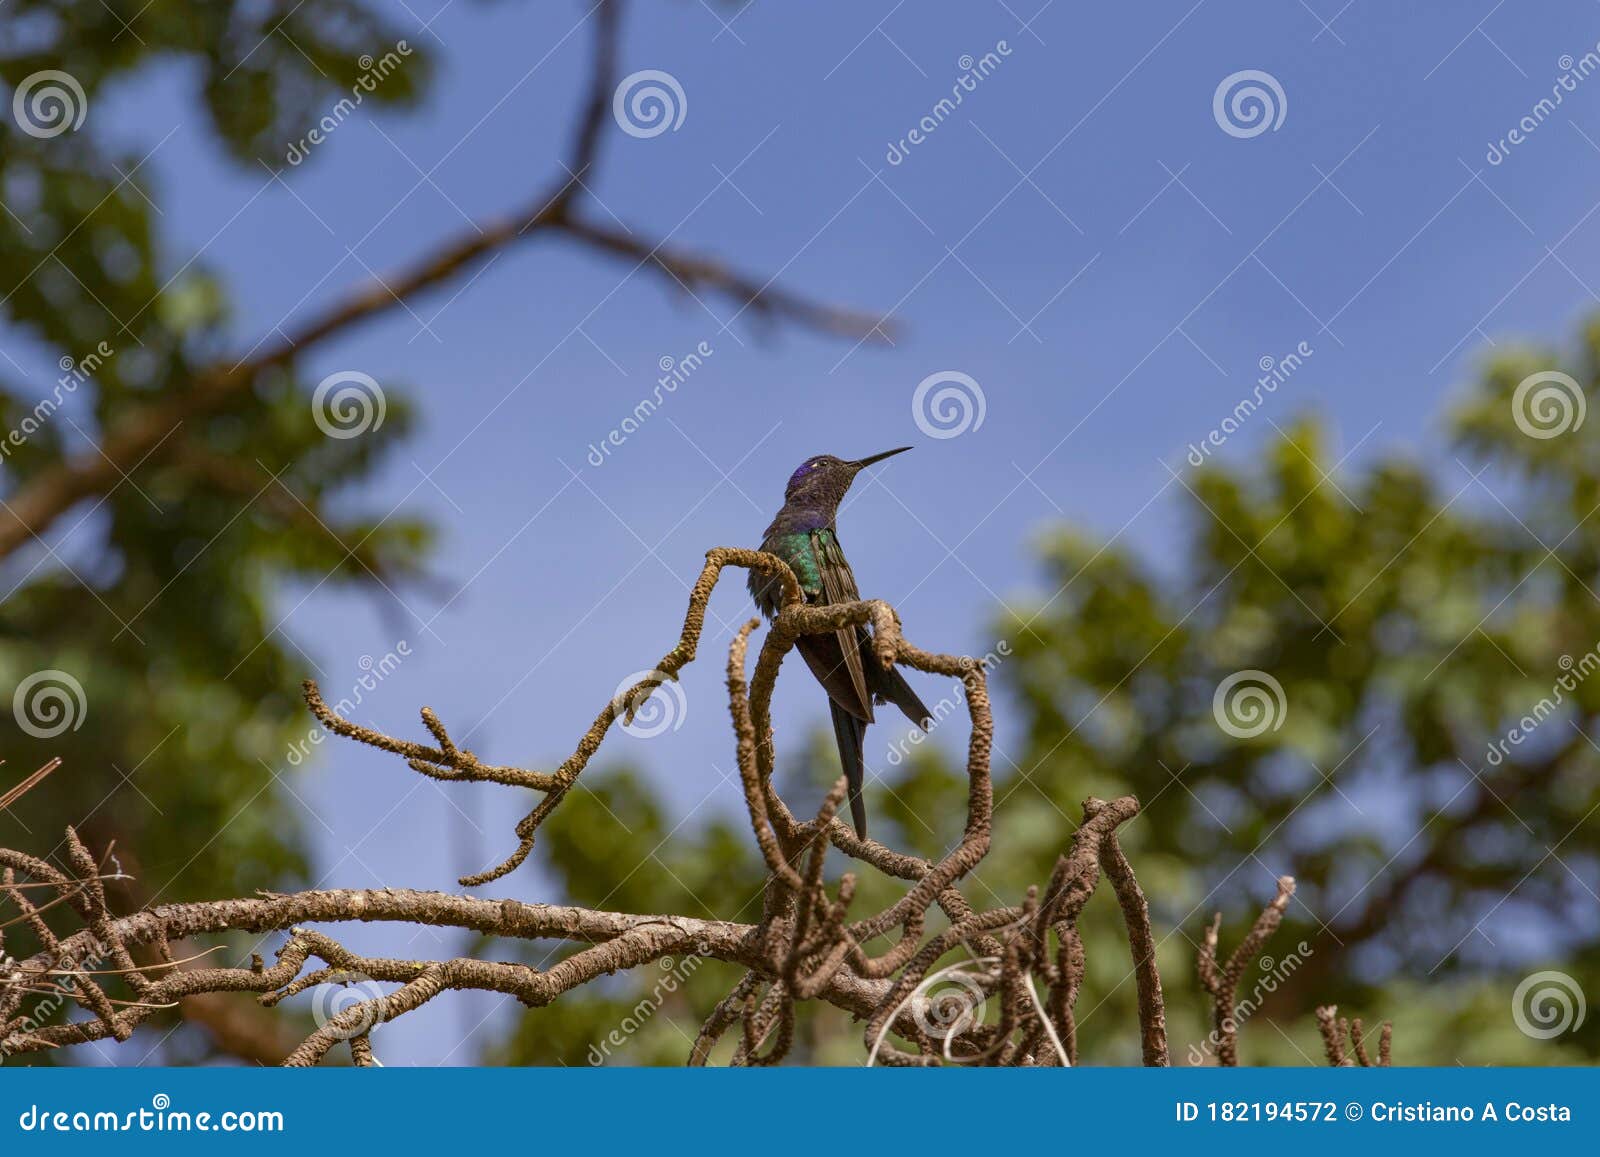 beautiful hummingbird, black, blue and green